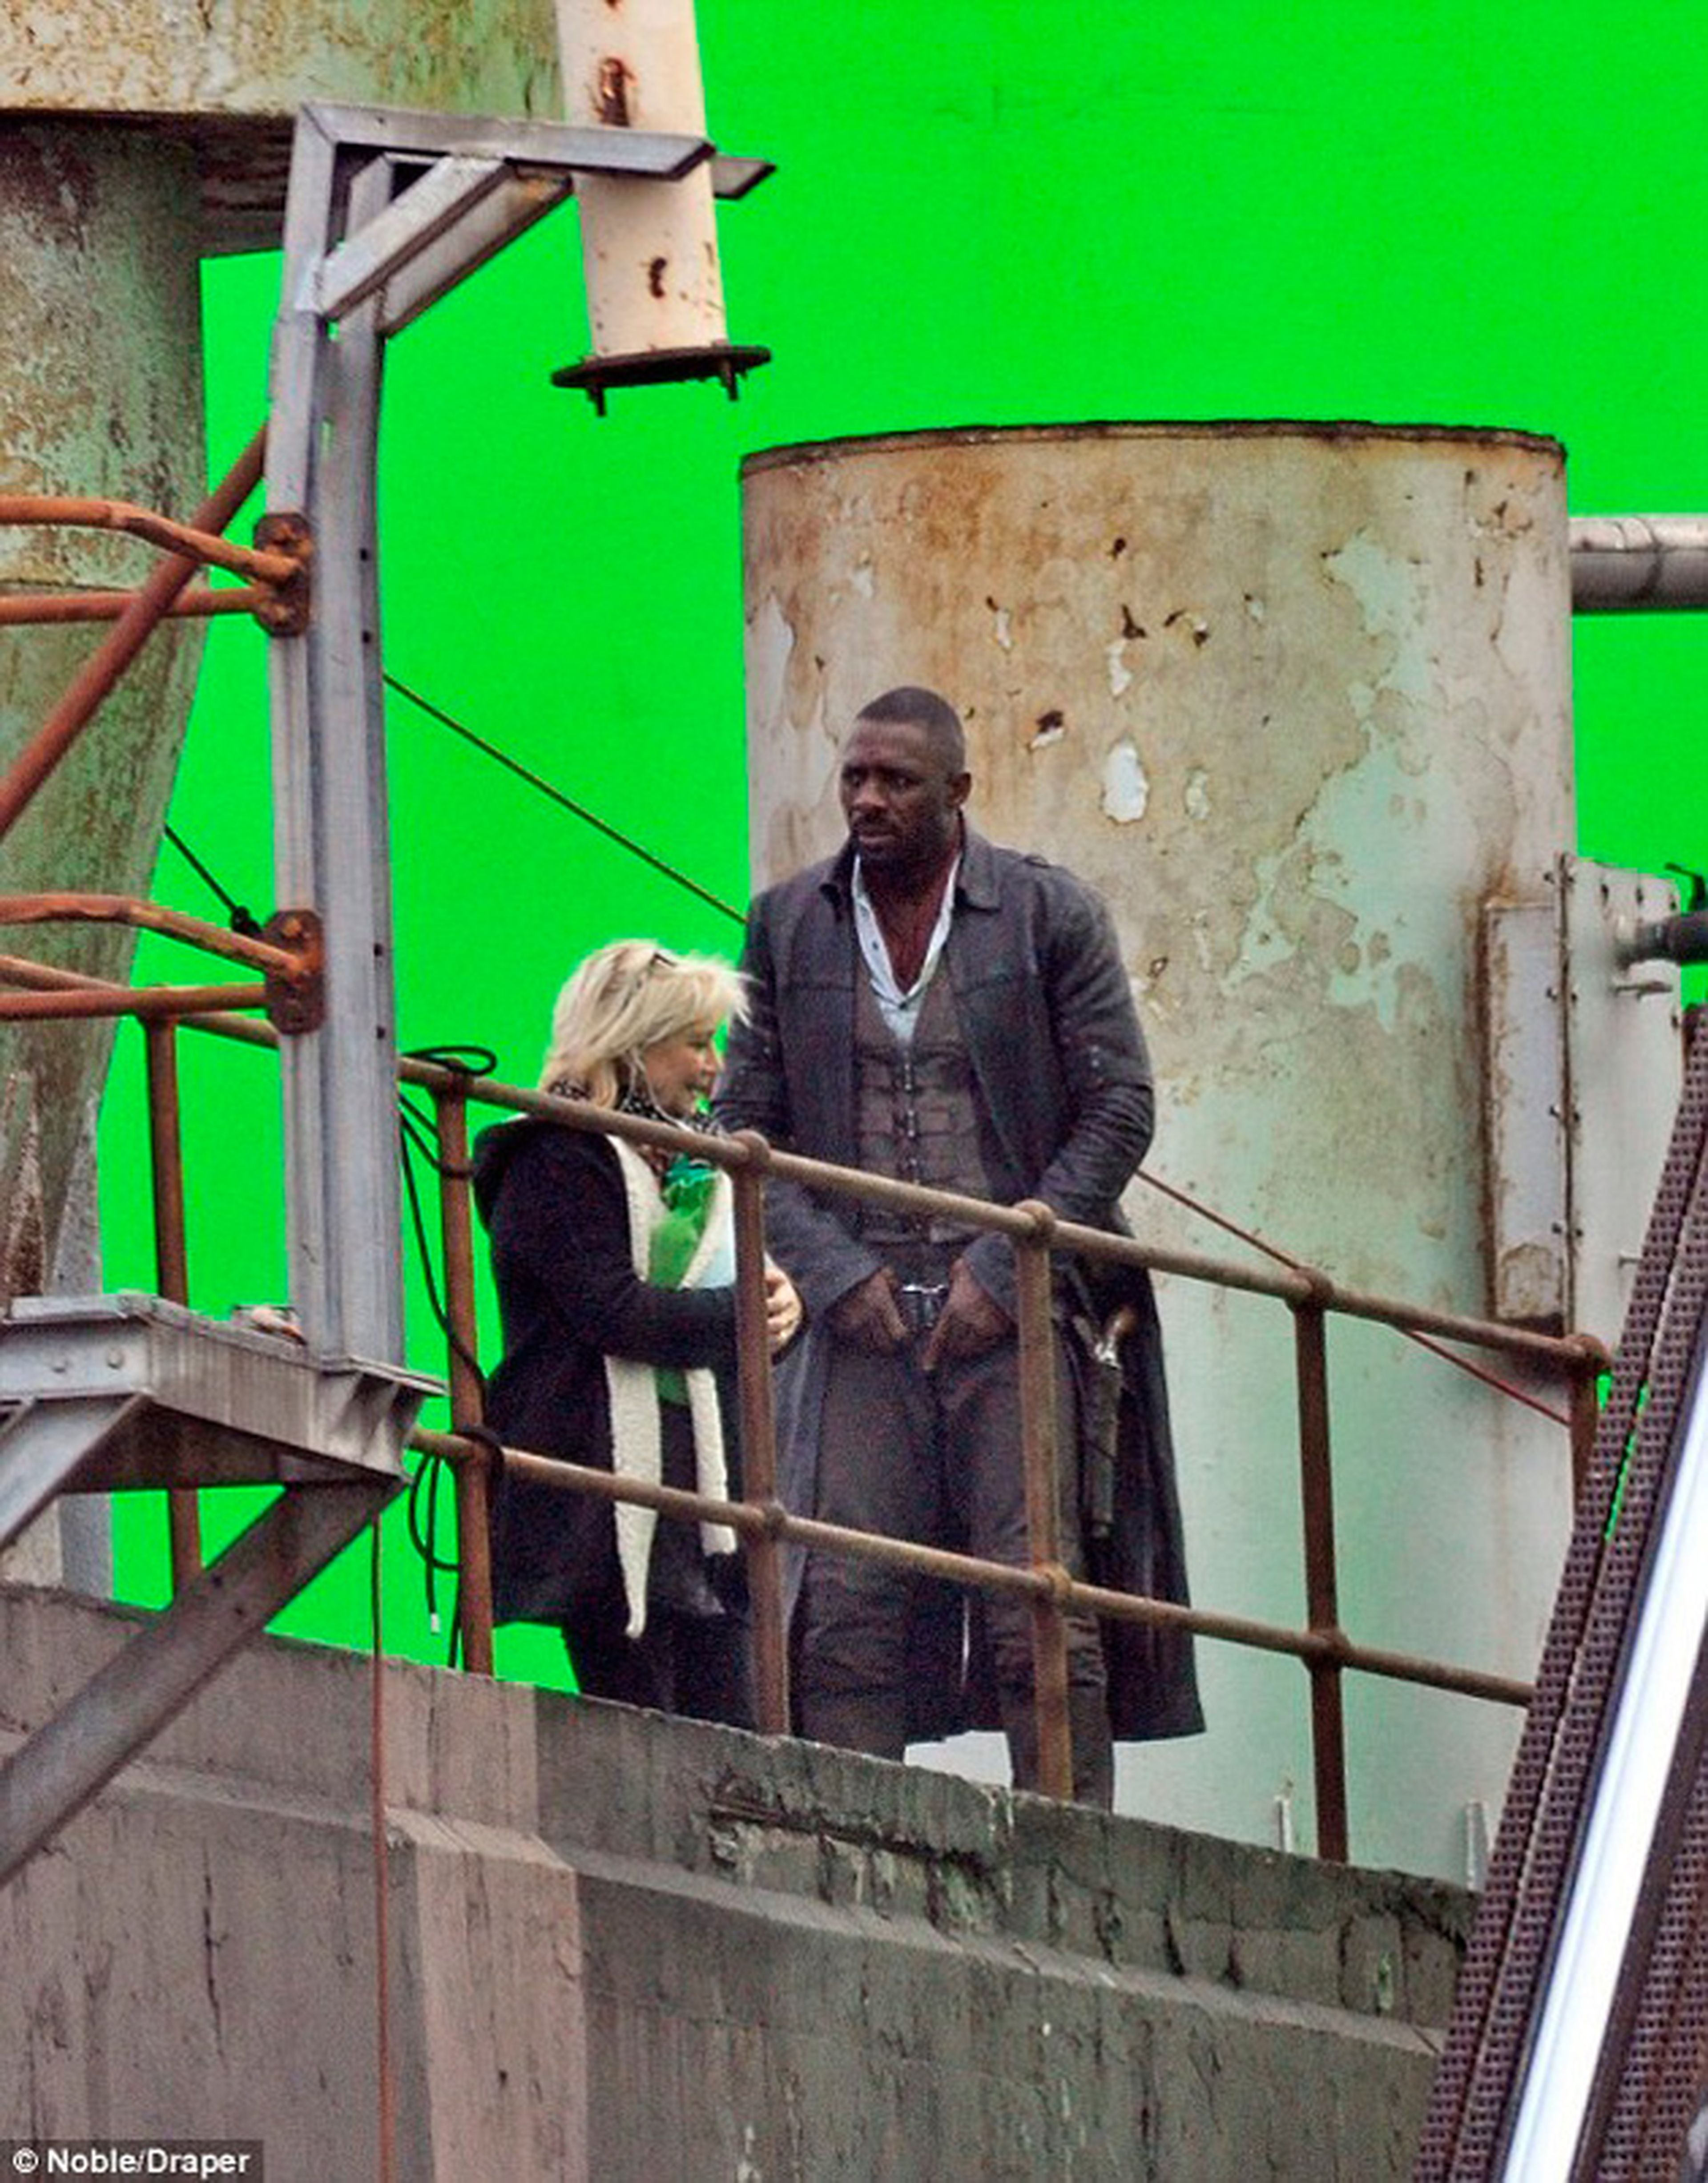 The Dark Tower - Primera imagen de Idris Elba como pistolero